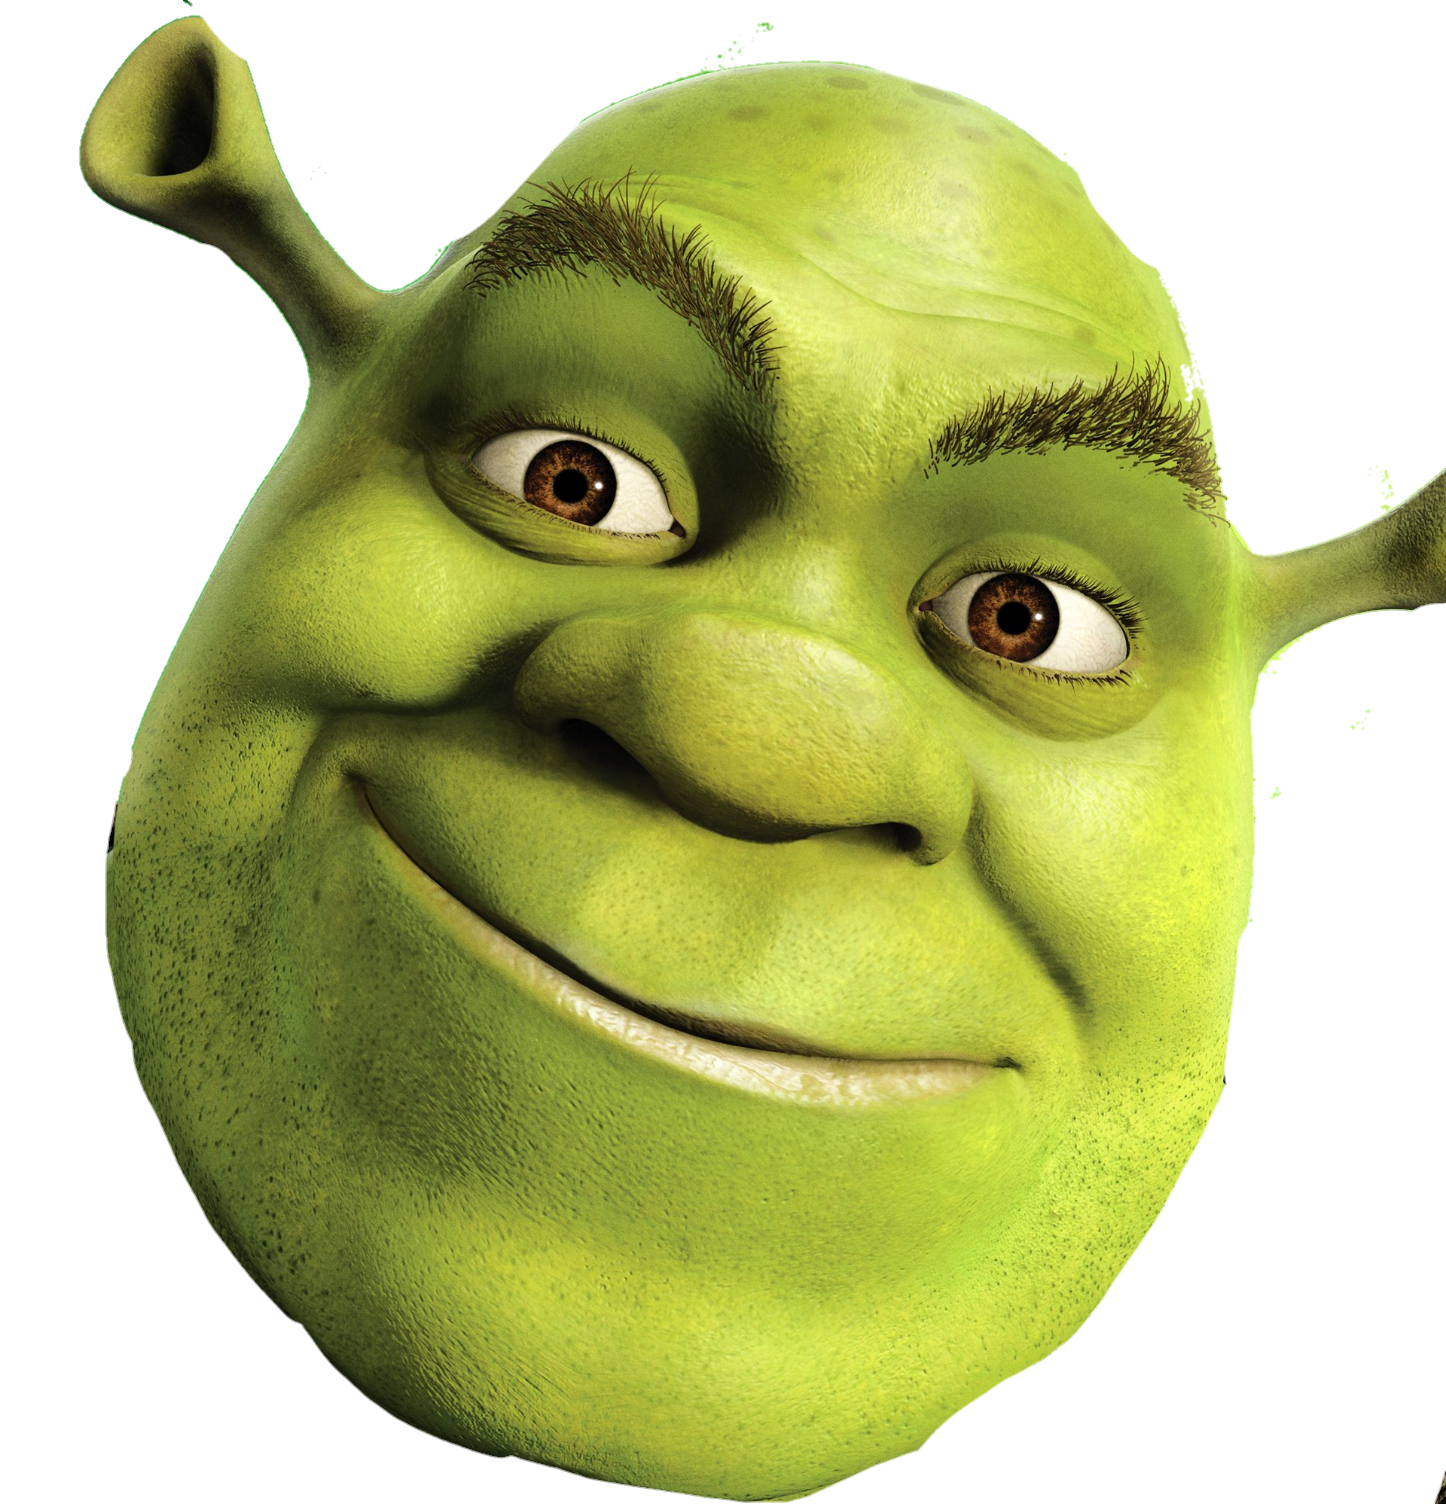 Free: Princess Fiona Shrek Film Series Animation, shrek transparent  background PNG clipart 